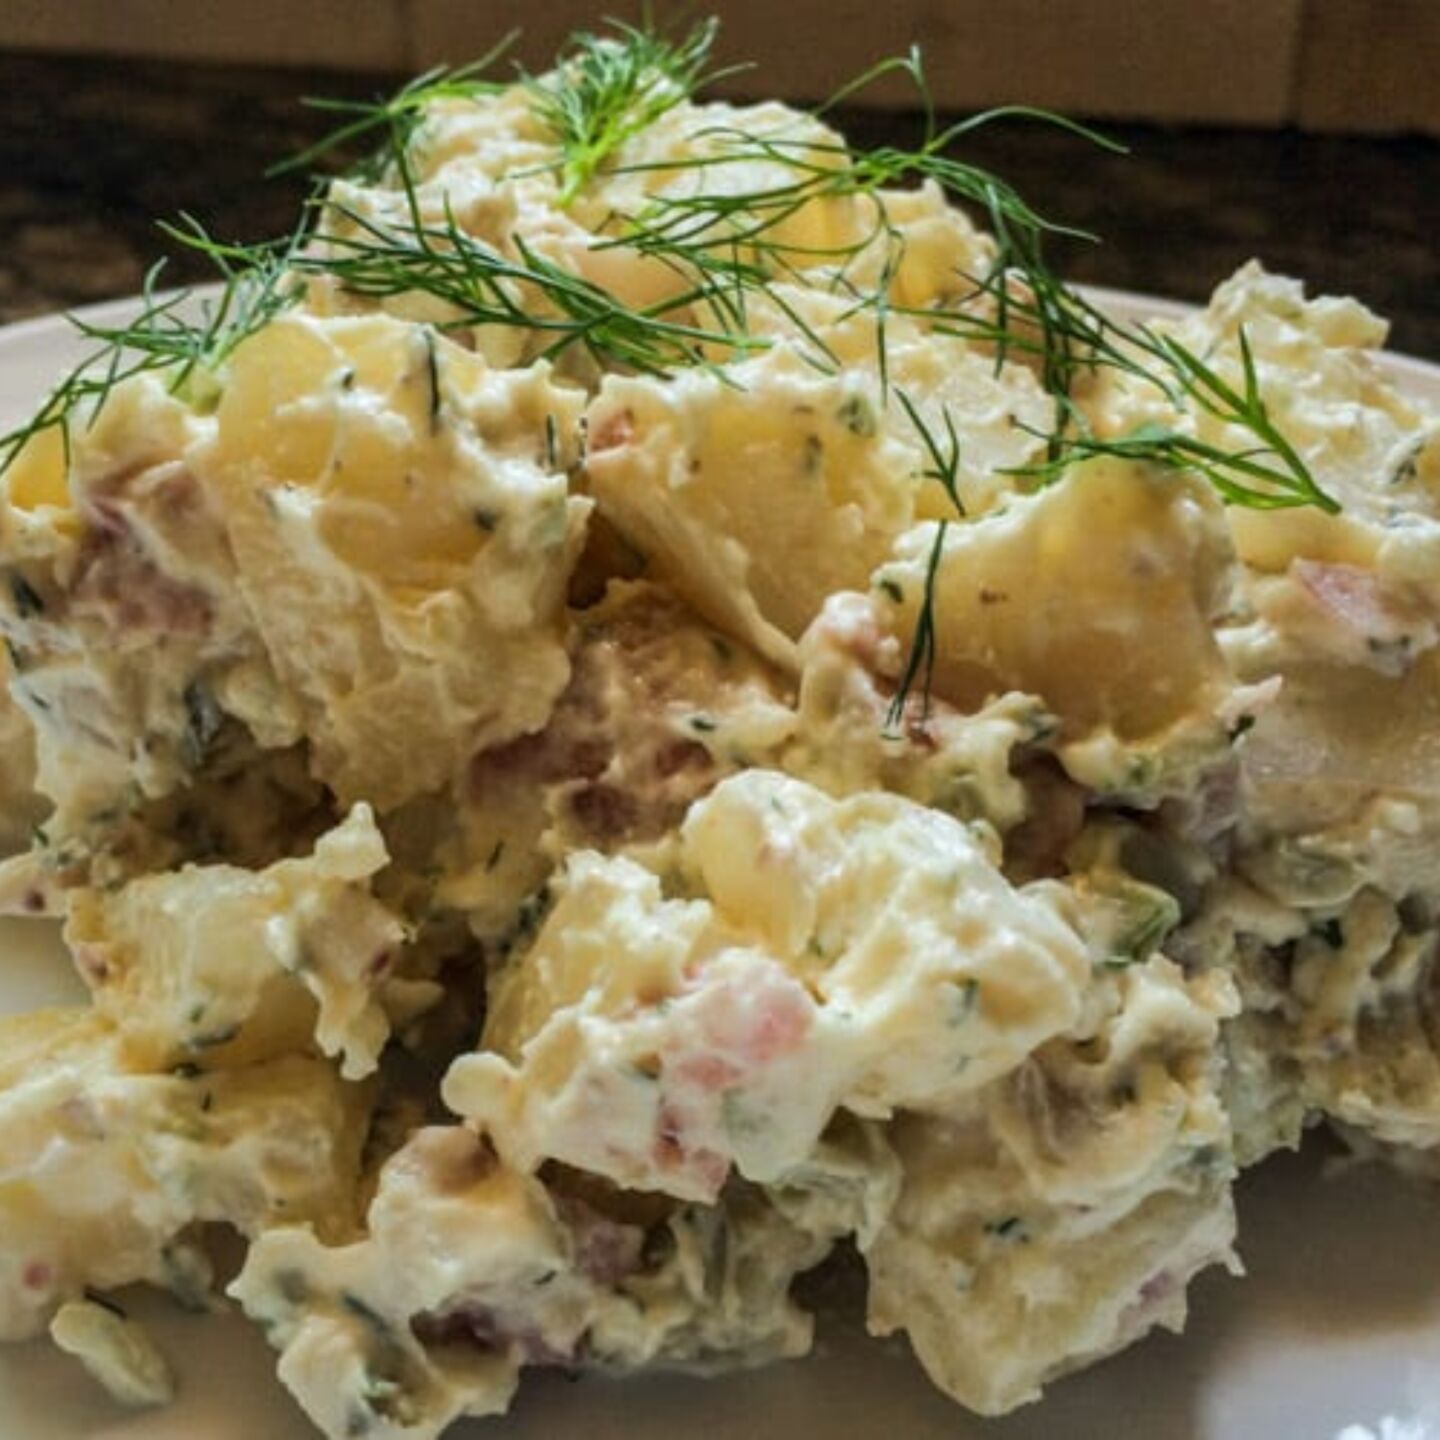 11. The Best Potato Salad